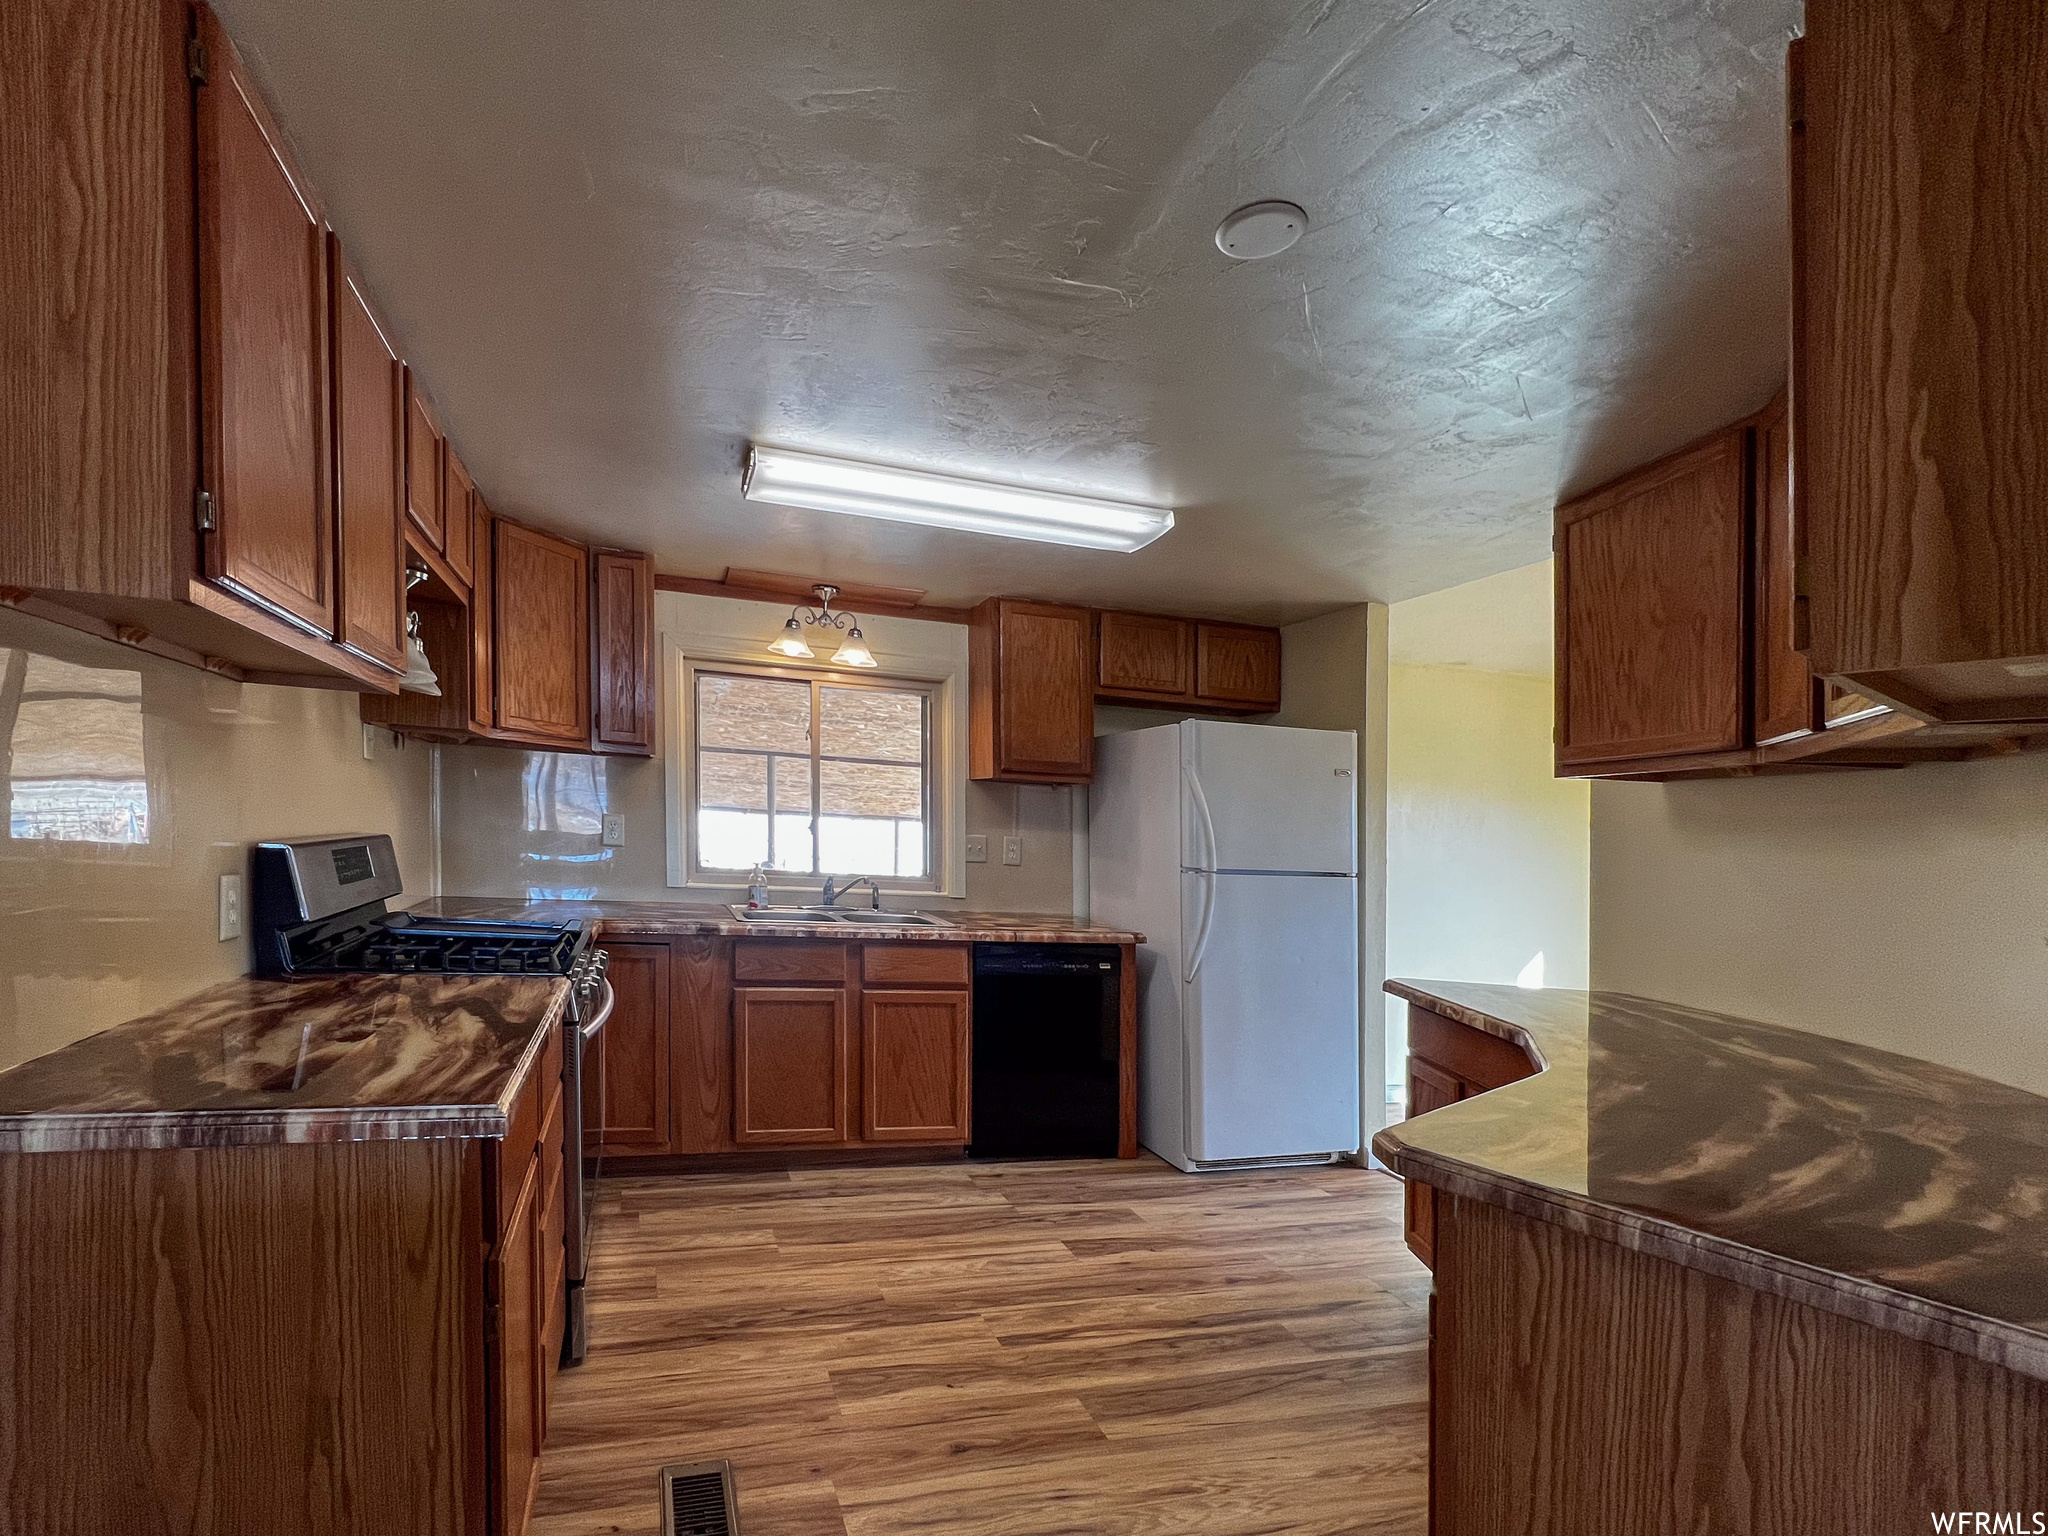 Kitchen featuring white fridge, dishwasher, sink, stainless steel range oven, and light hardwood / wood-style flooring